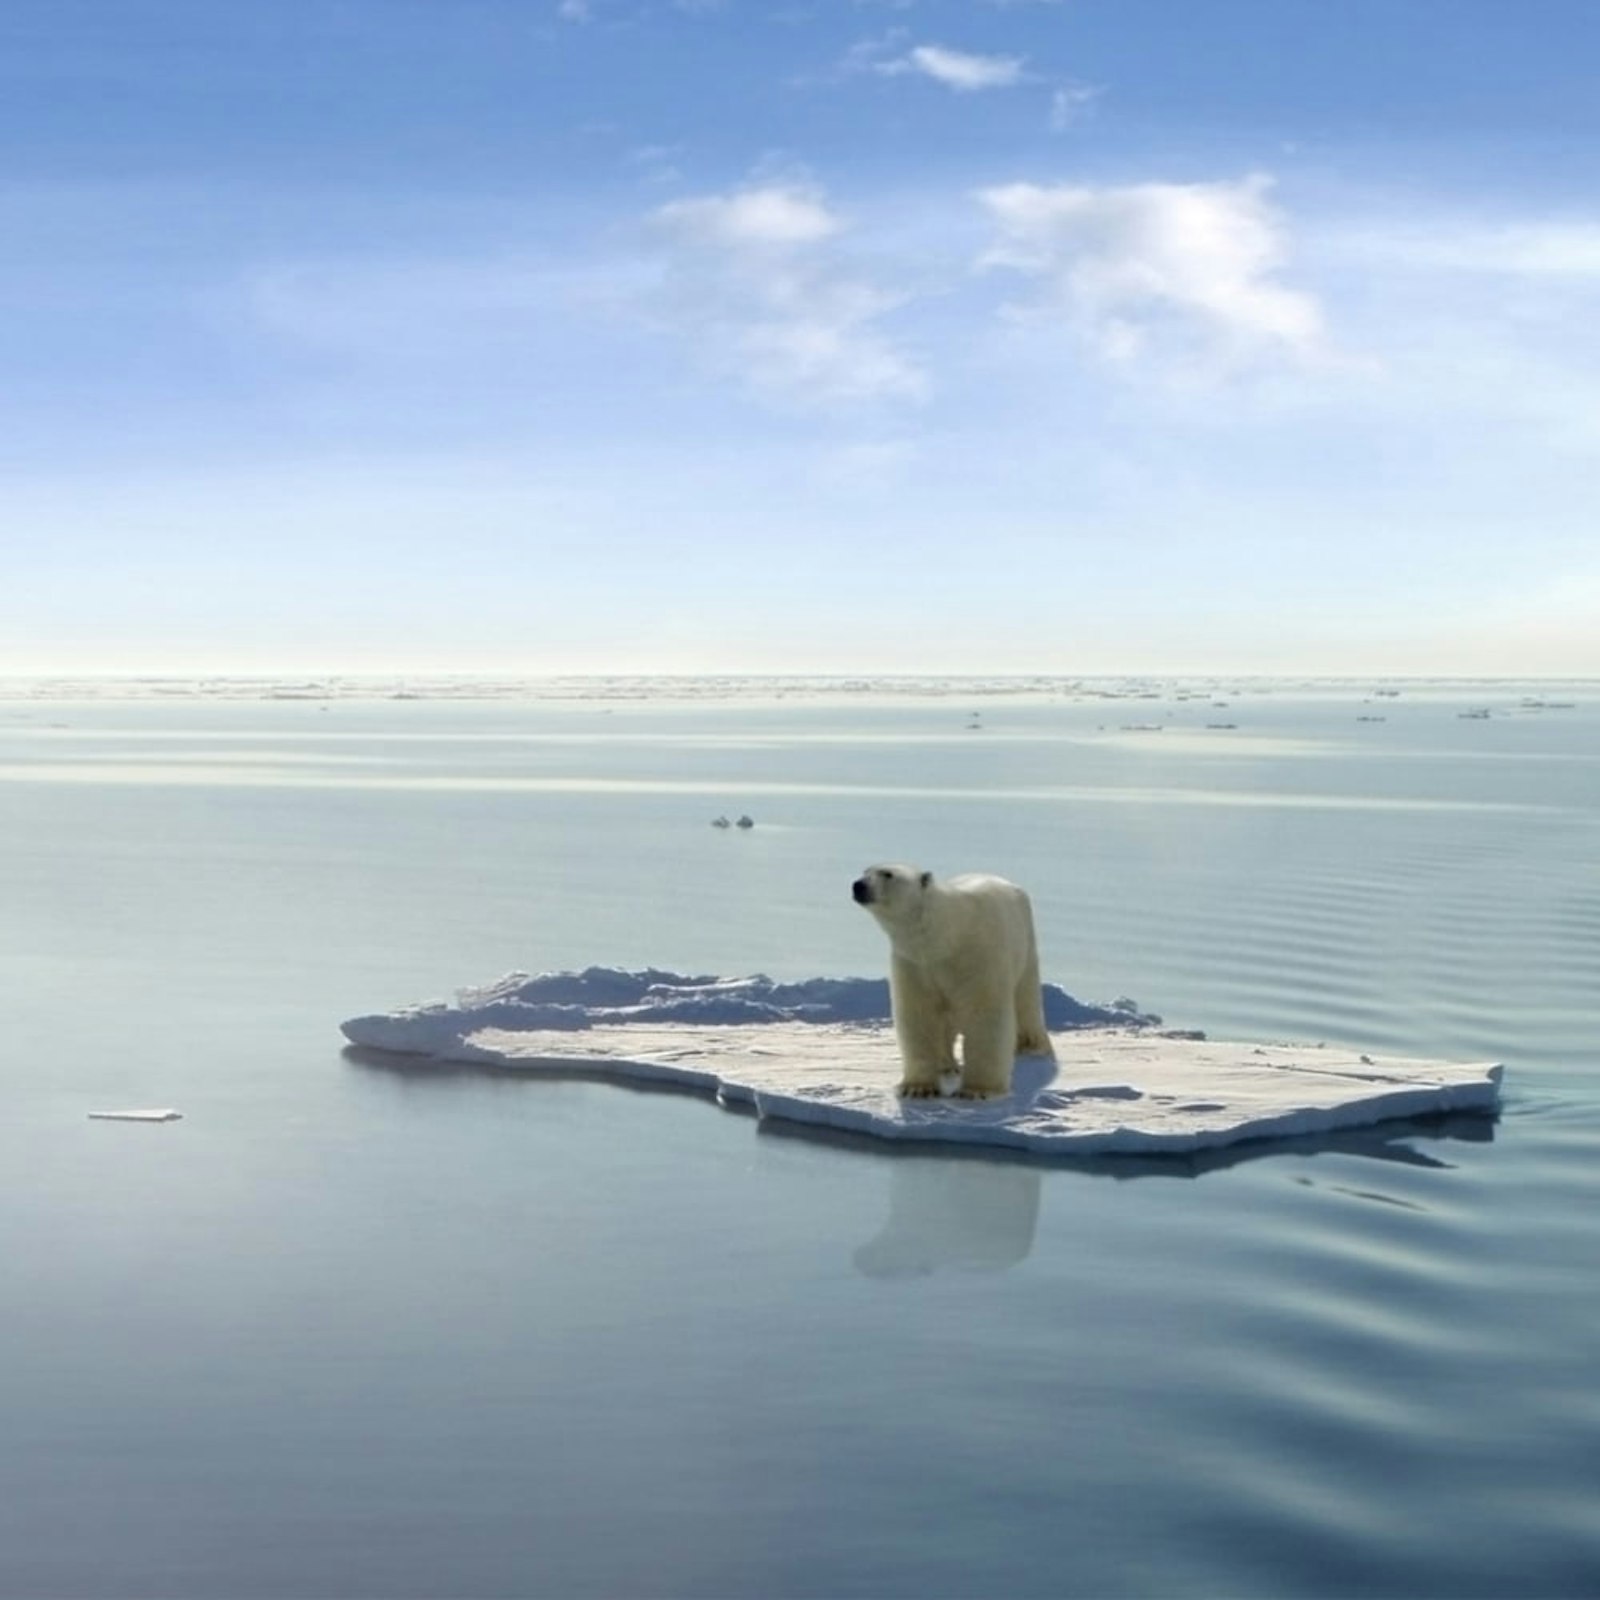 Polar bear stranded on iceberg